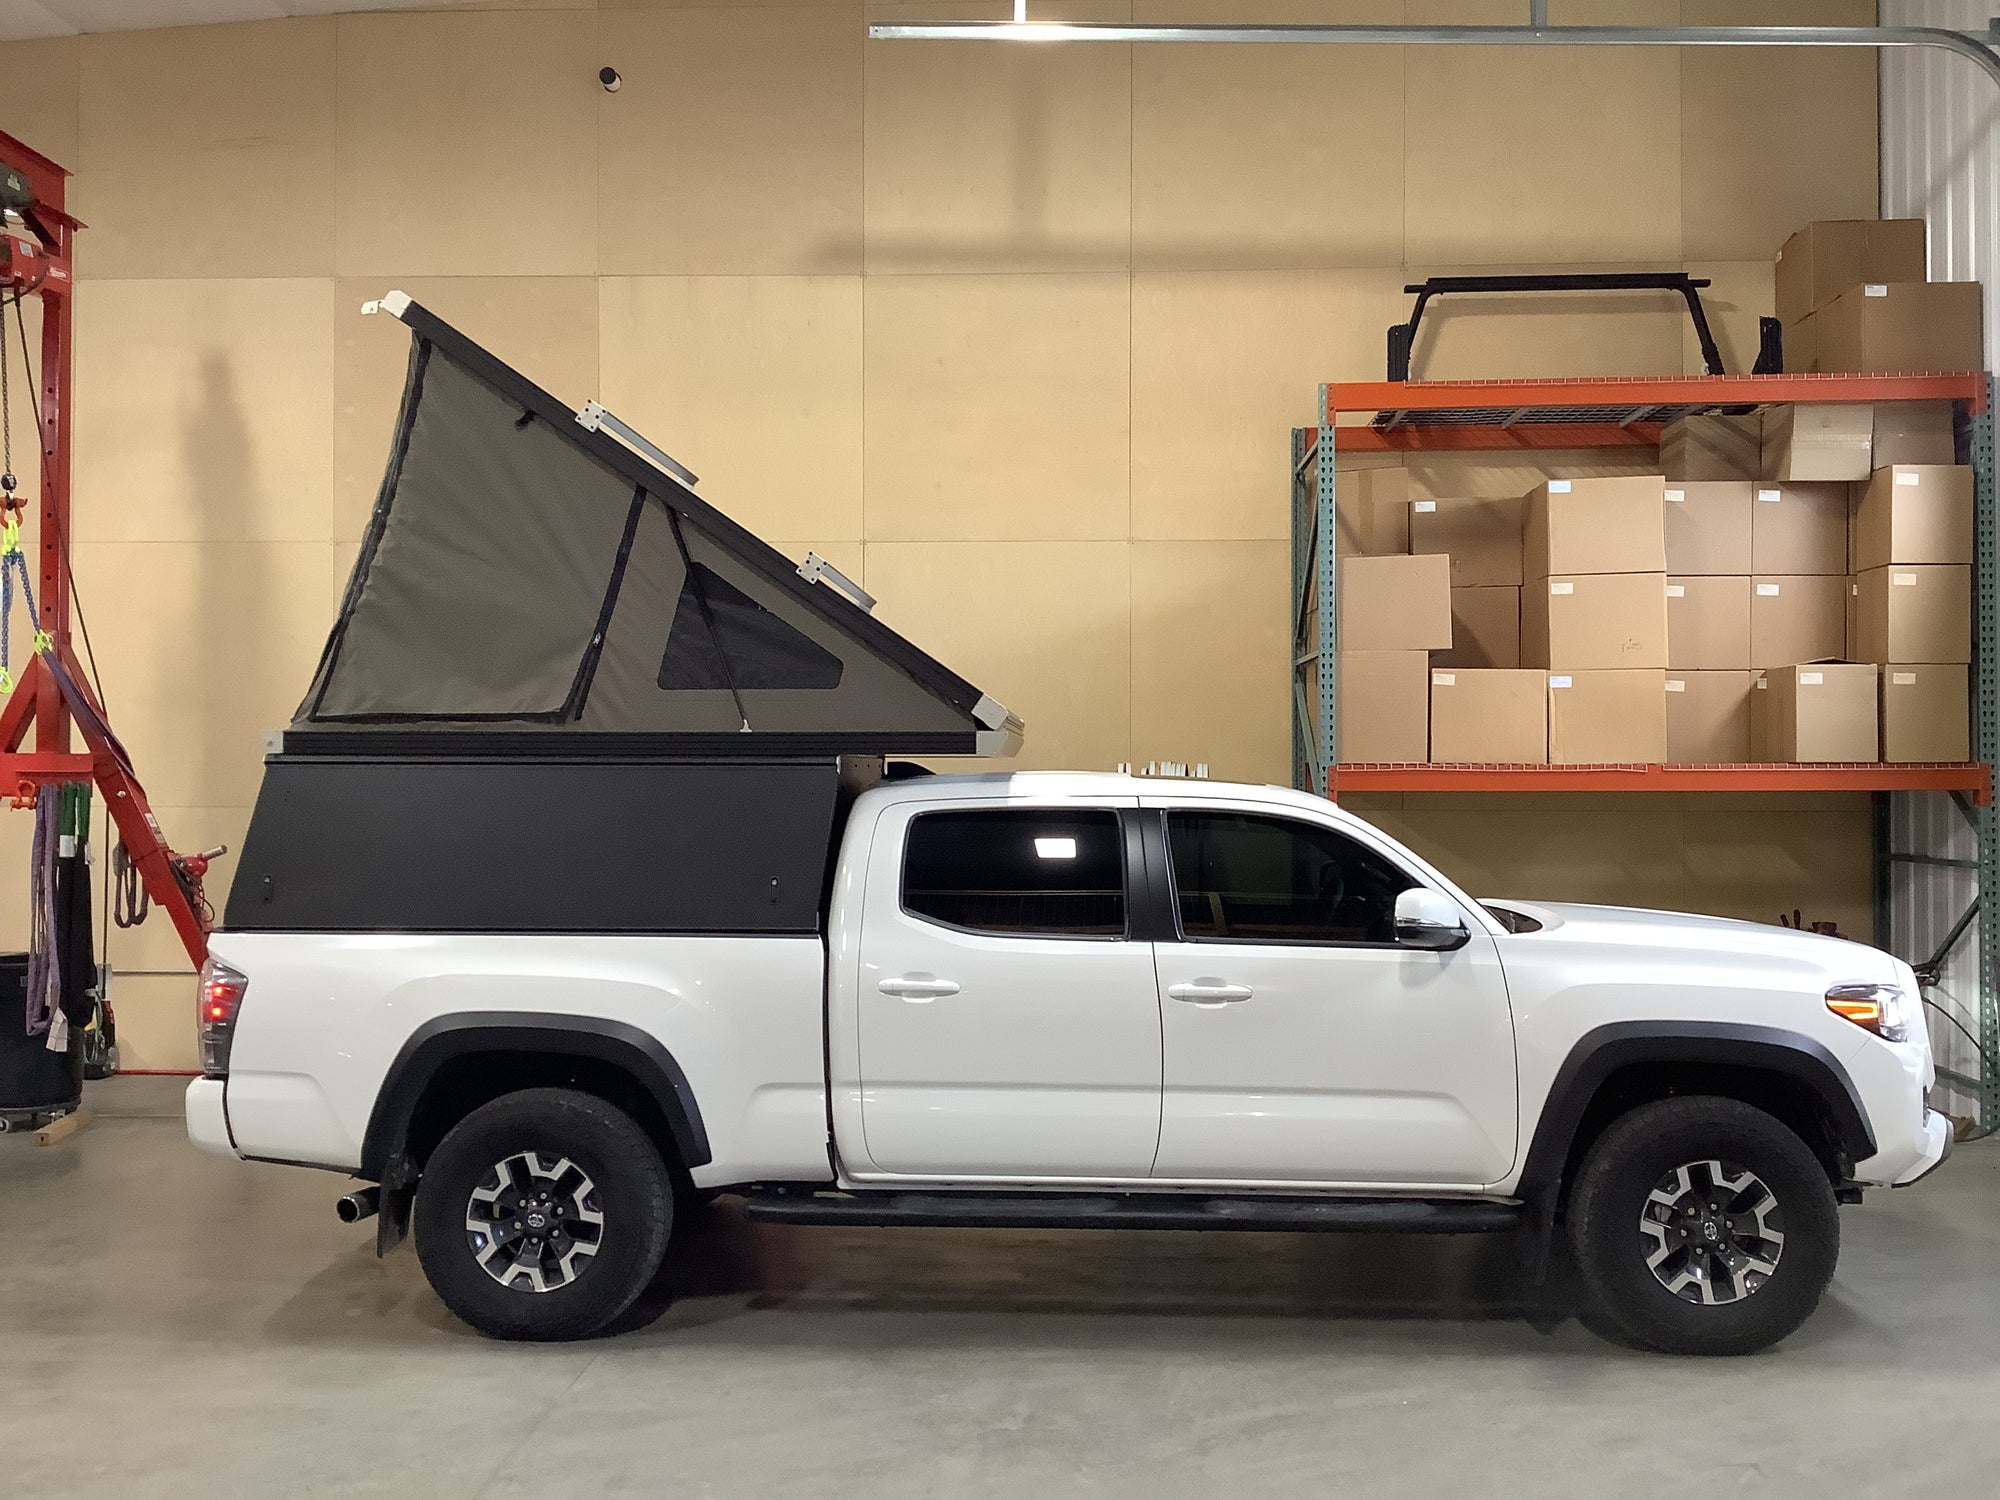 2022 Toyota Tacoma Camper - Build #4023